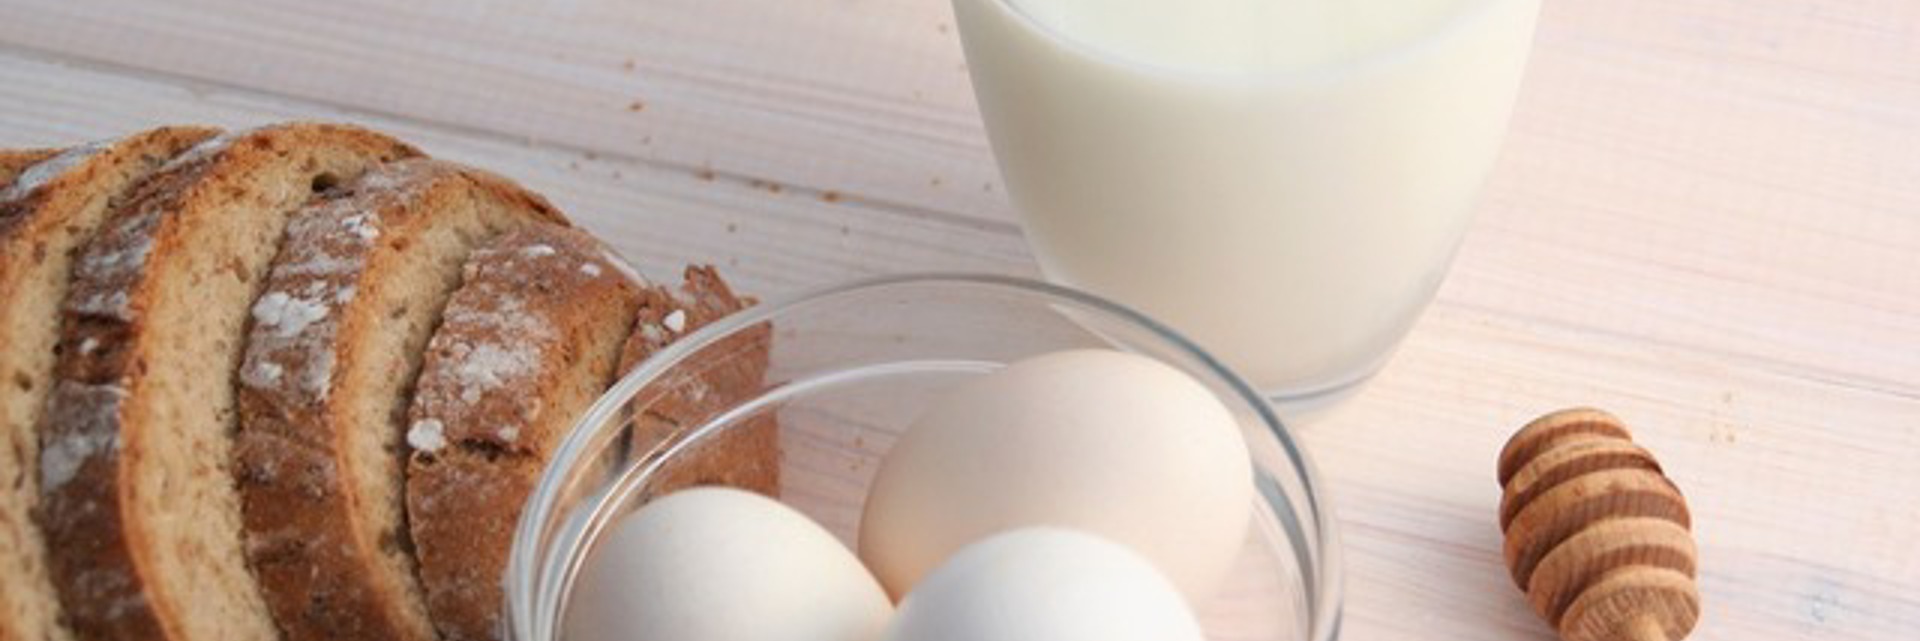 Eggs Milk Bread Food Drink C94aca 640